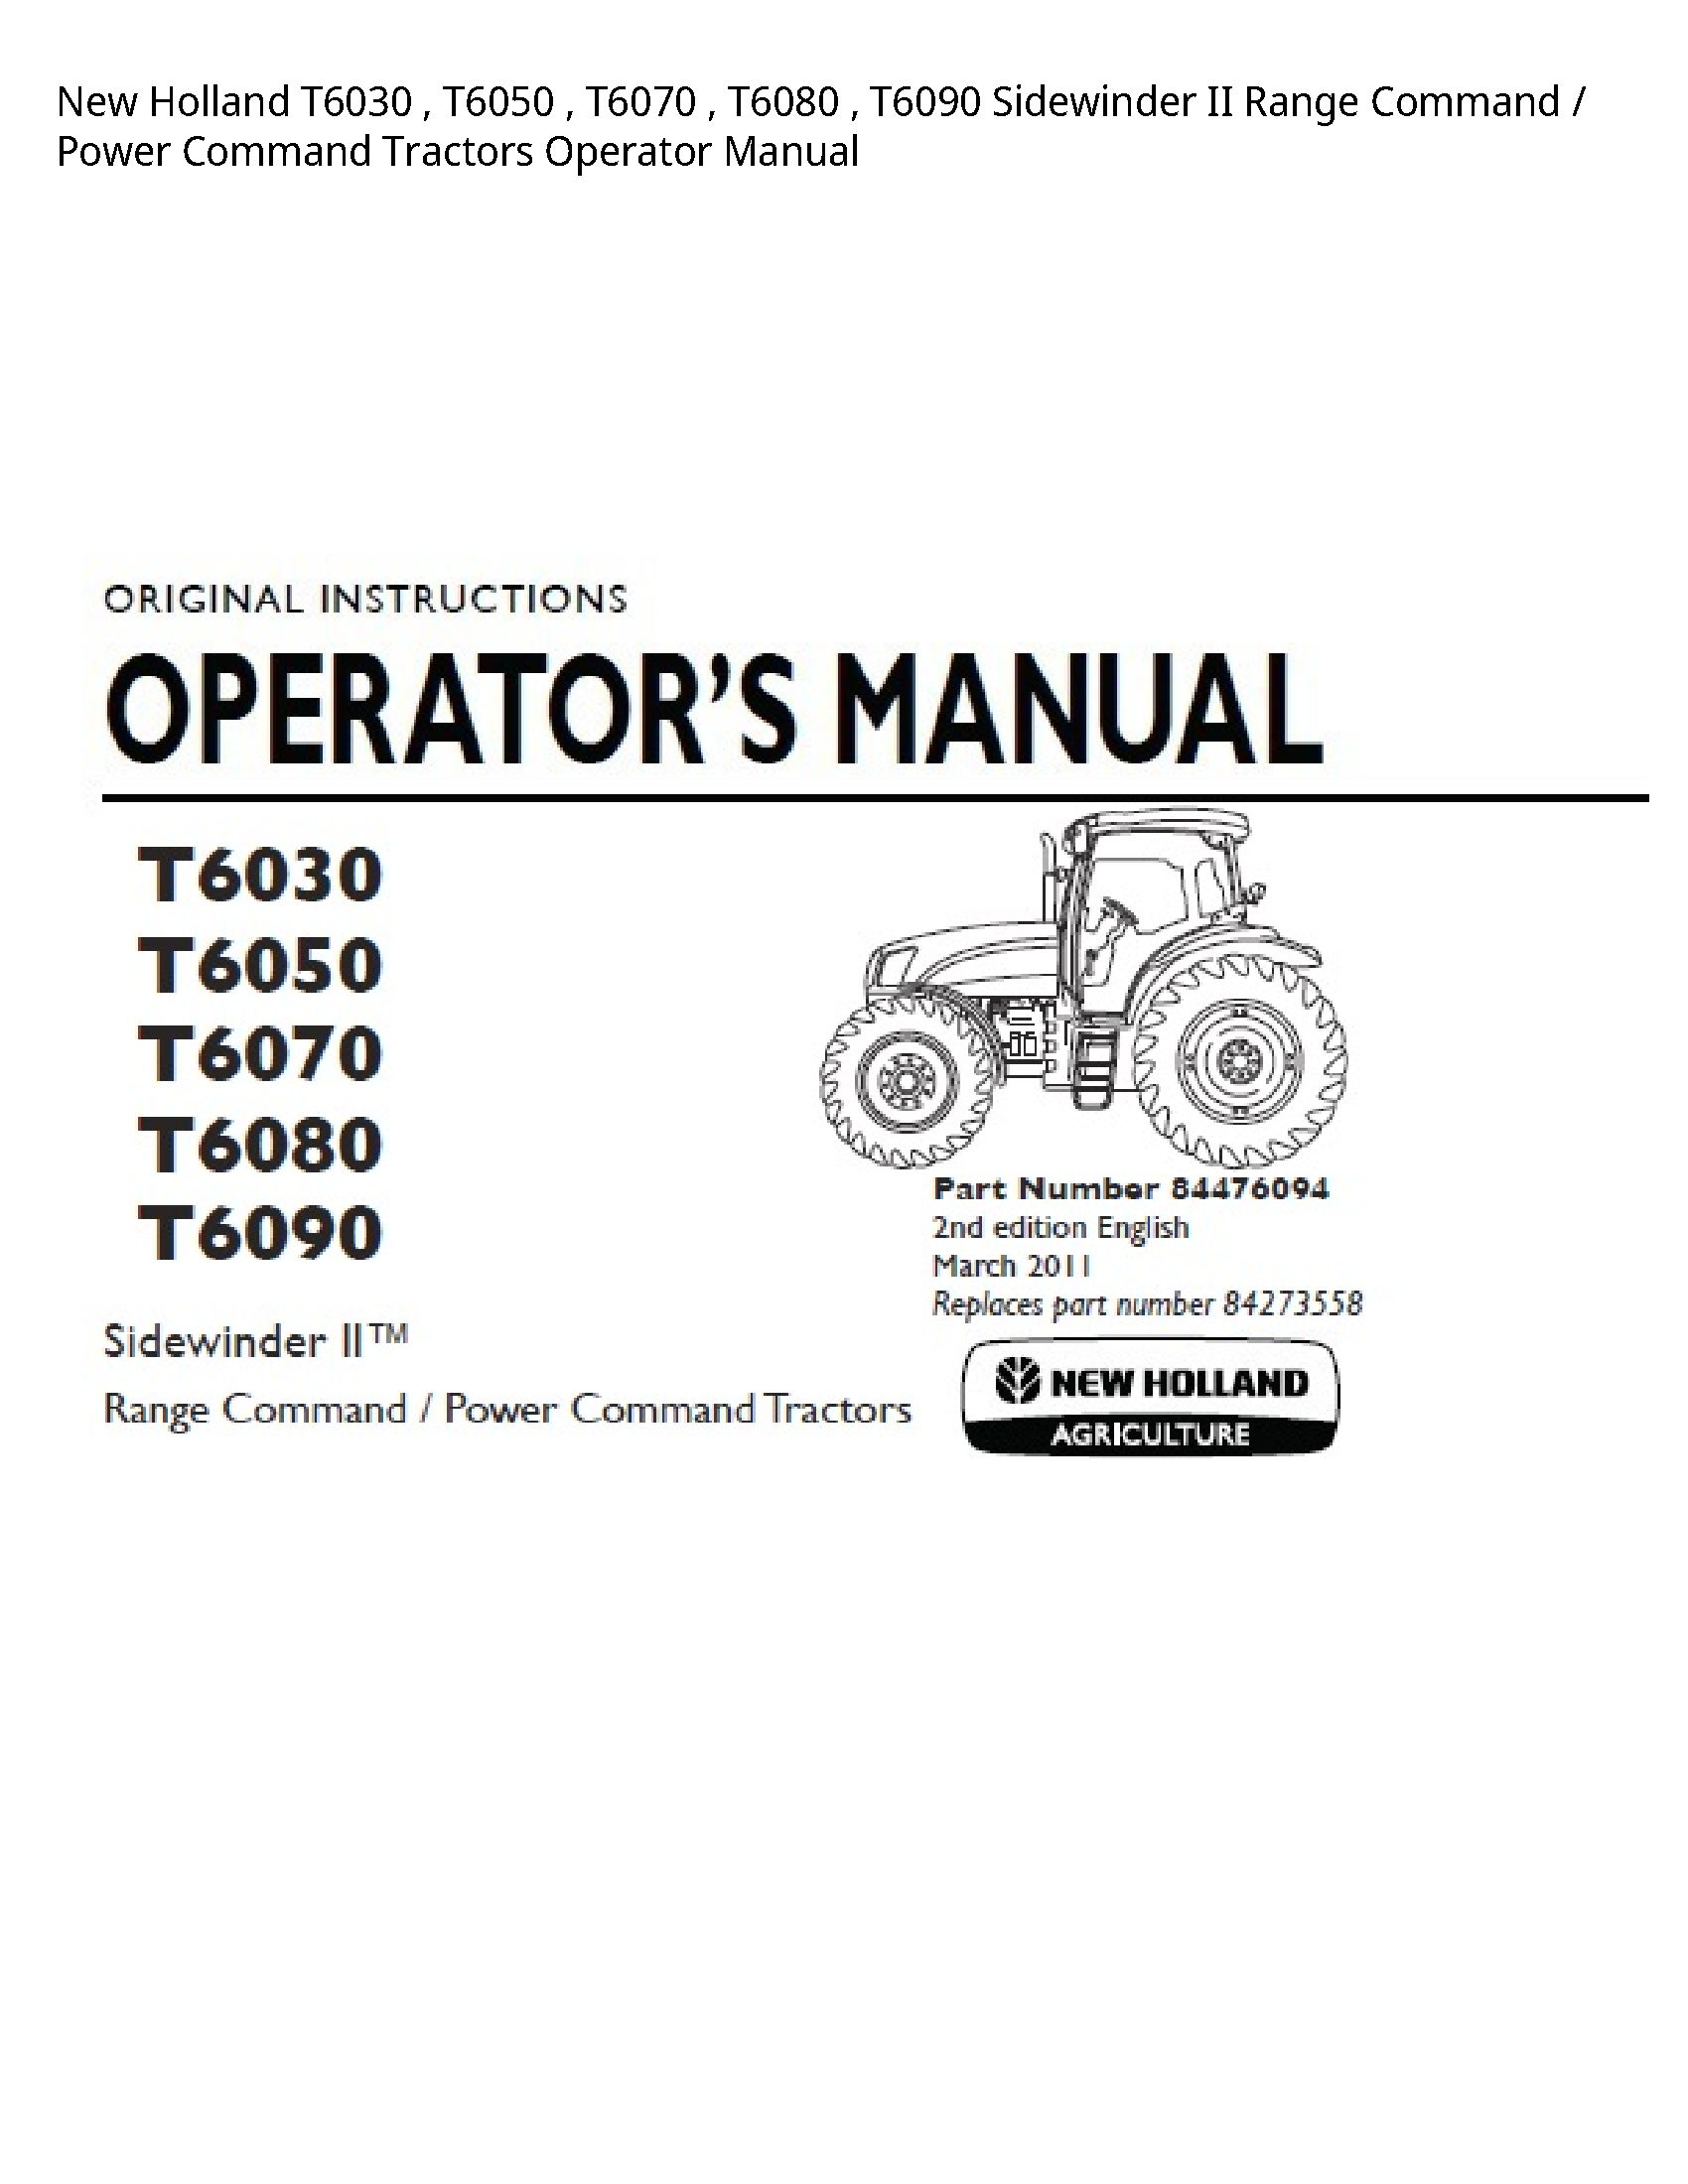 New Holland T6030 Sidewinder II Range Command Power Command Tractors Operator manual